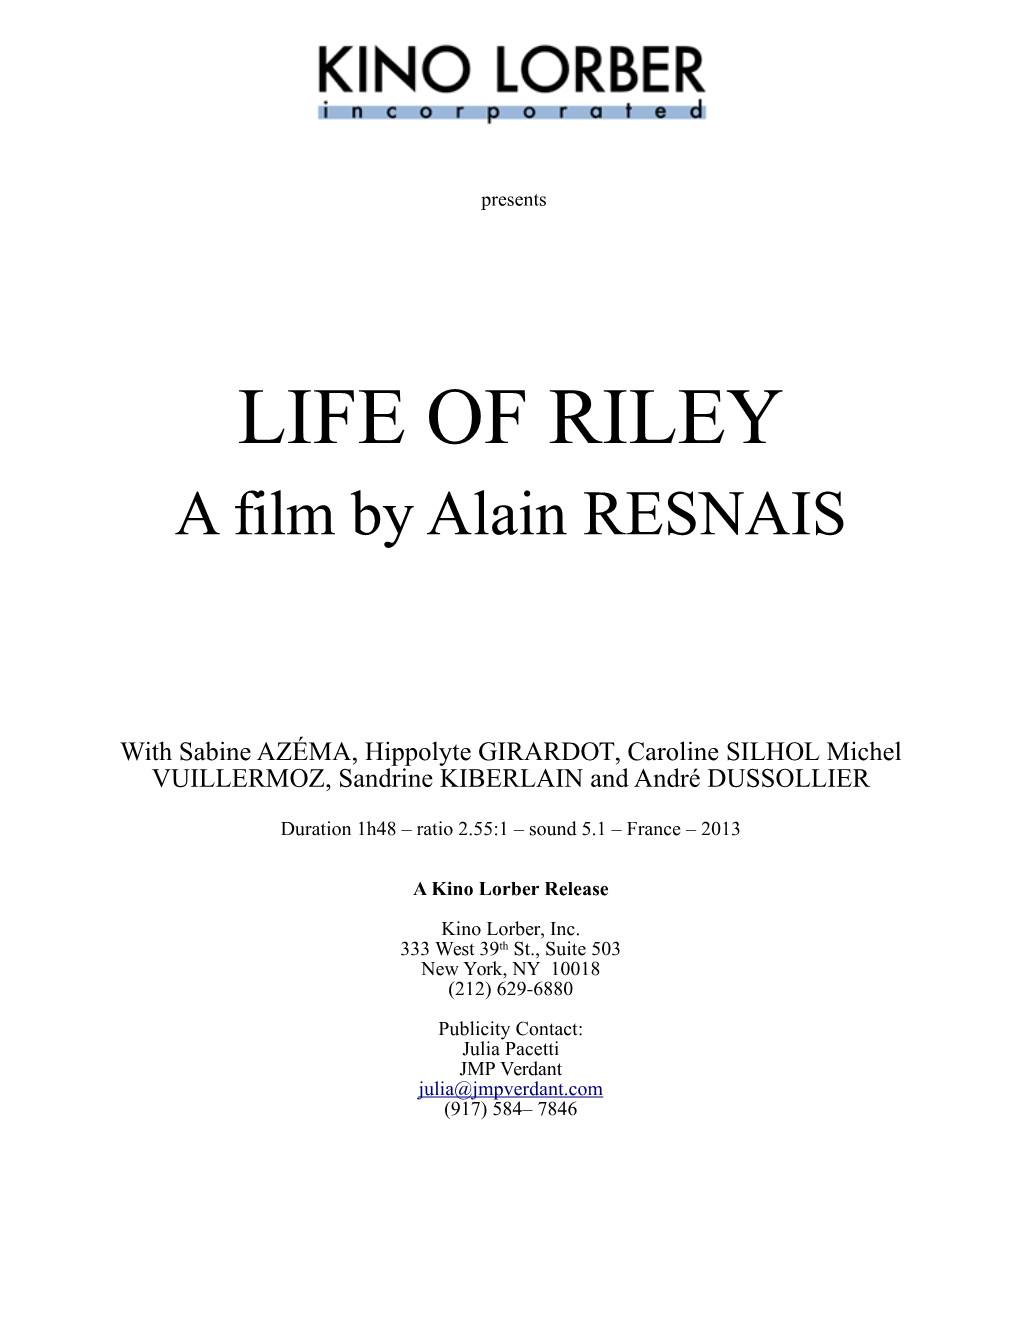 LIFE of RILEY a Film by Alain RESNAIS